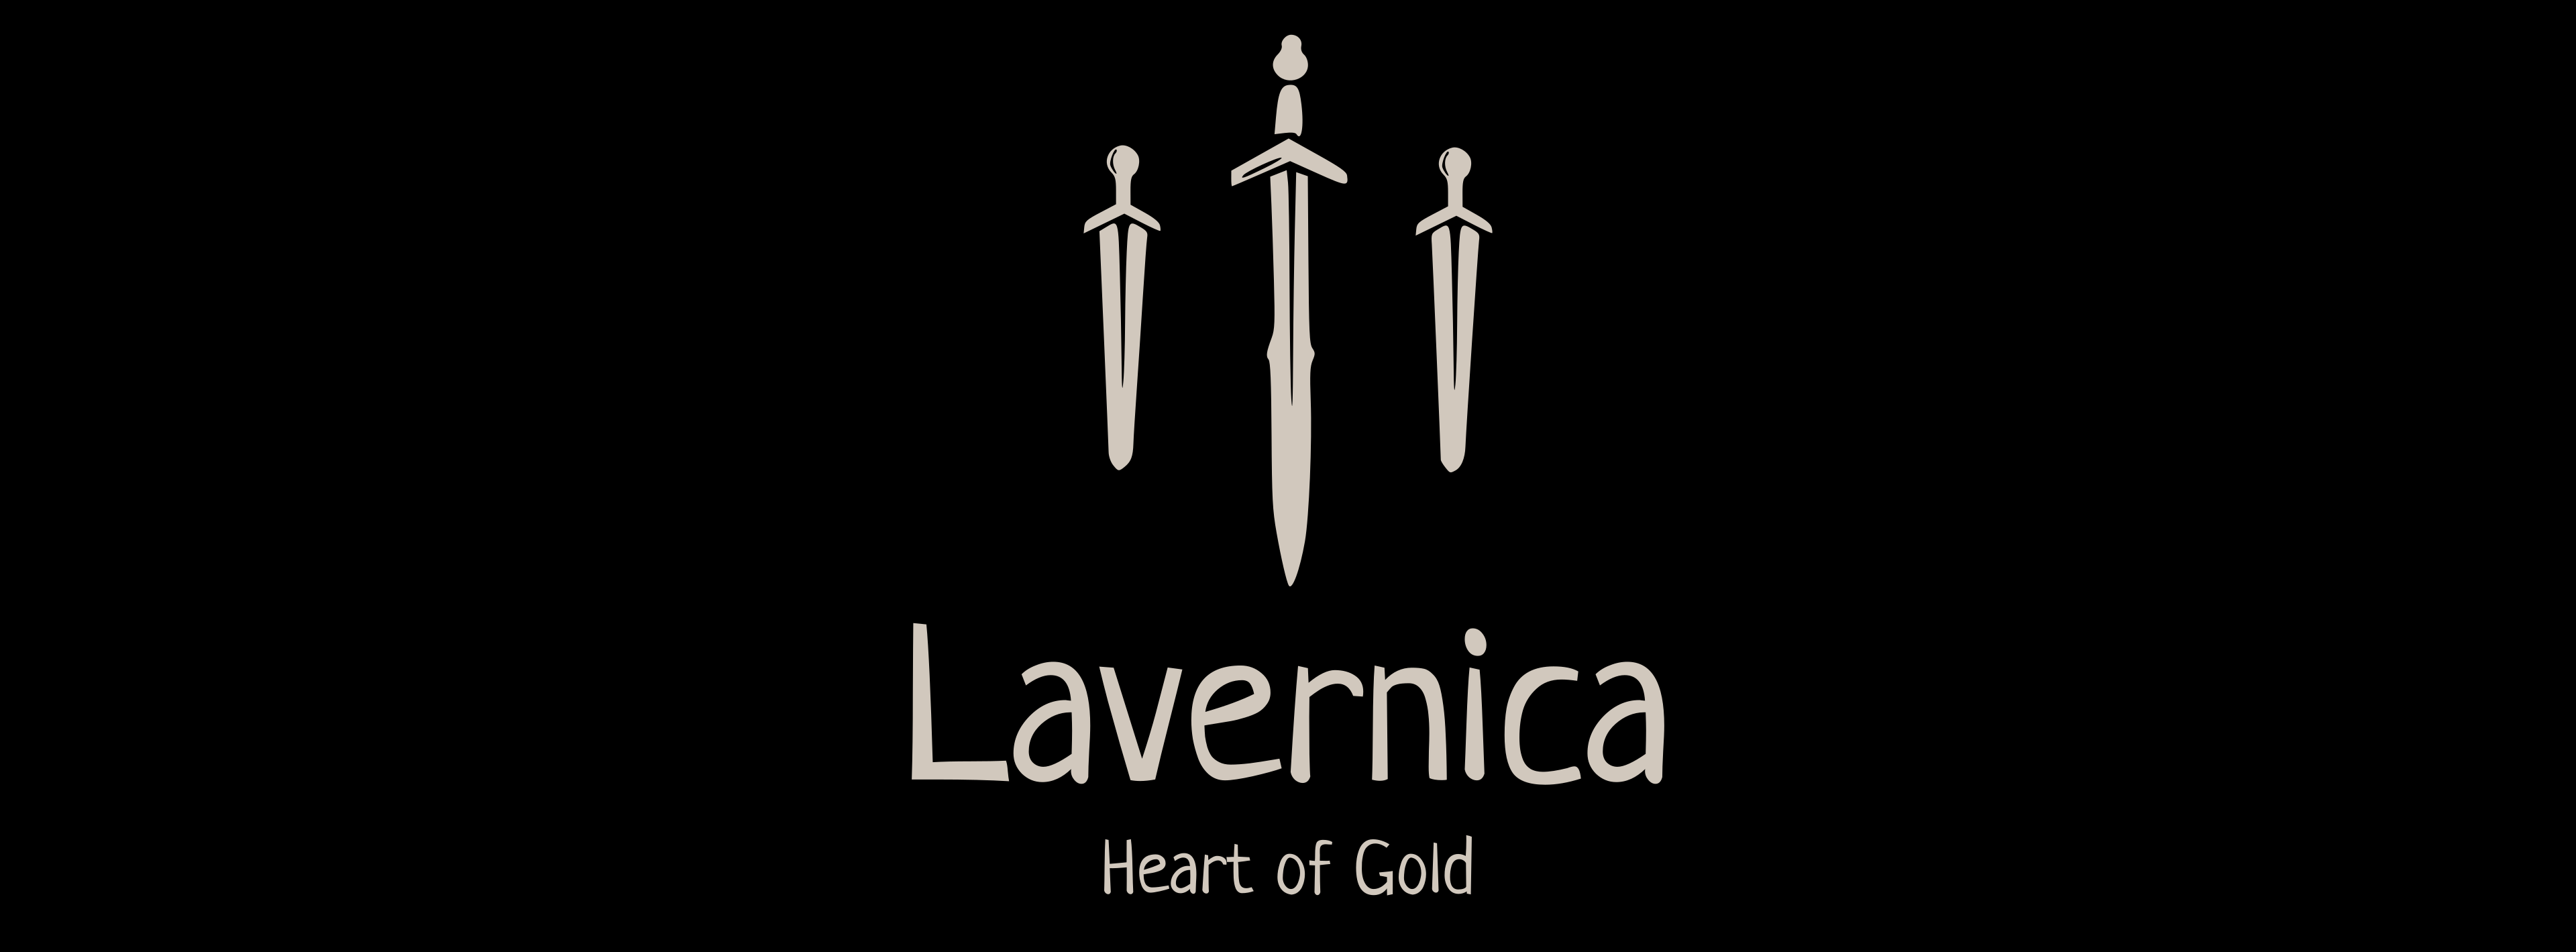 Lavernica: Heart of Gold